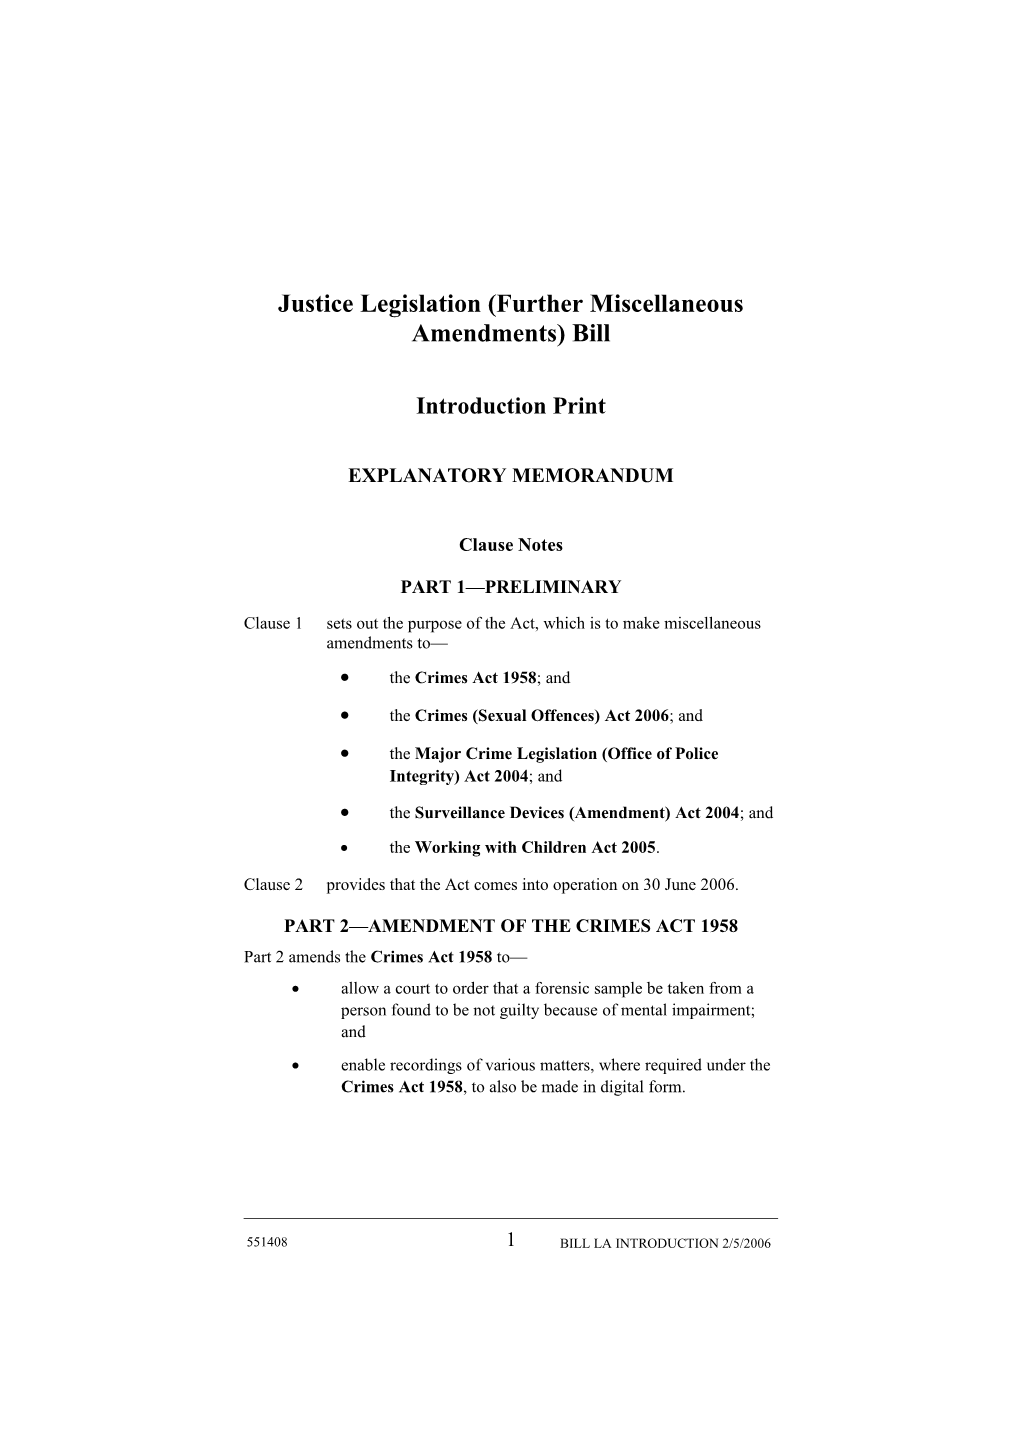 Justice Legislation (Further Miscellaneous Amendments) Bill